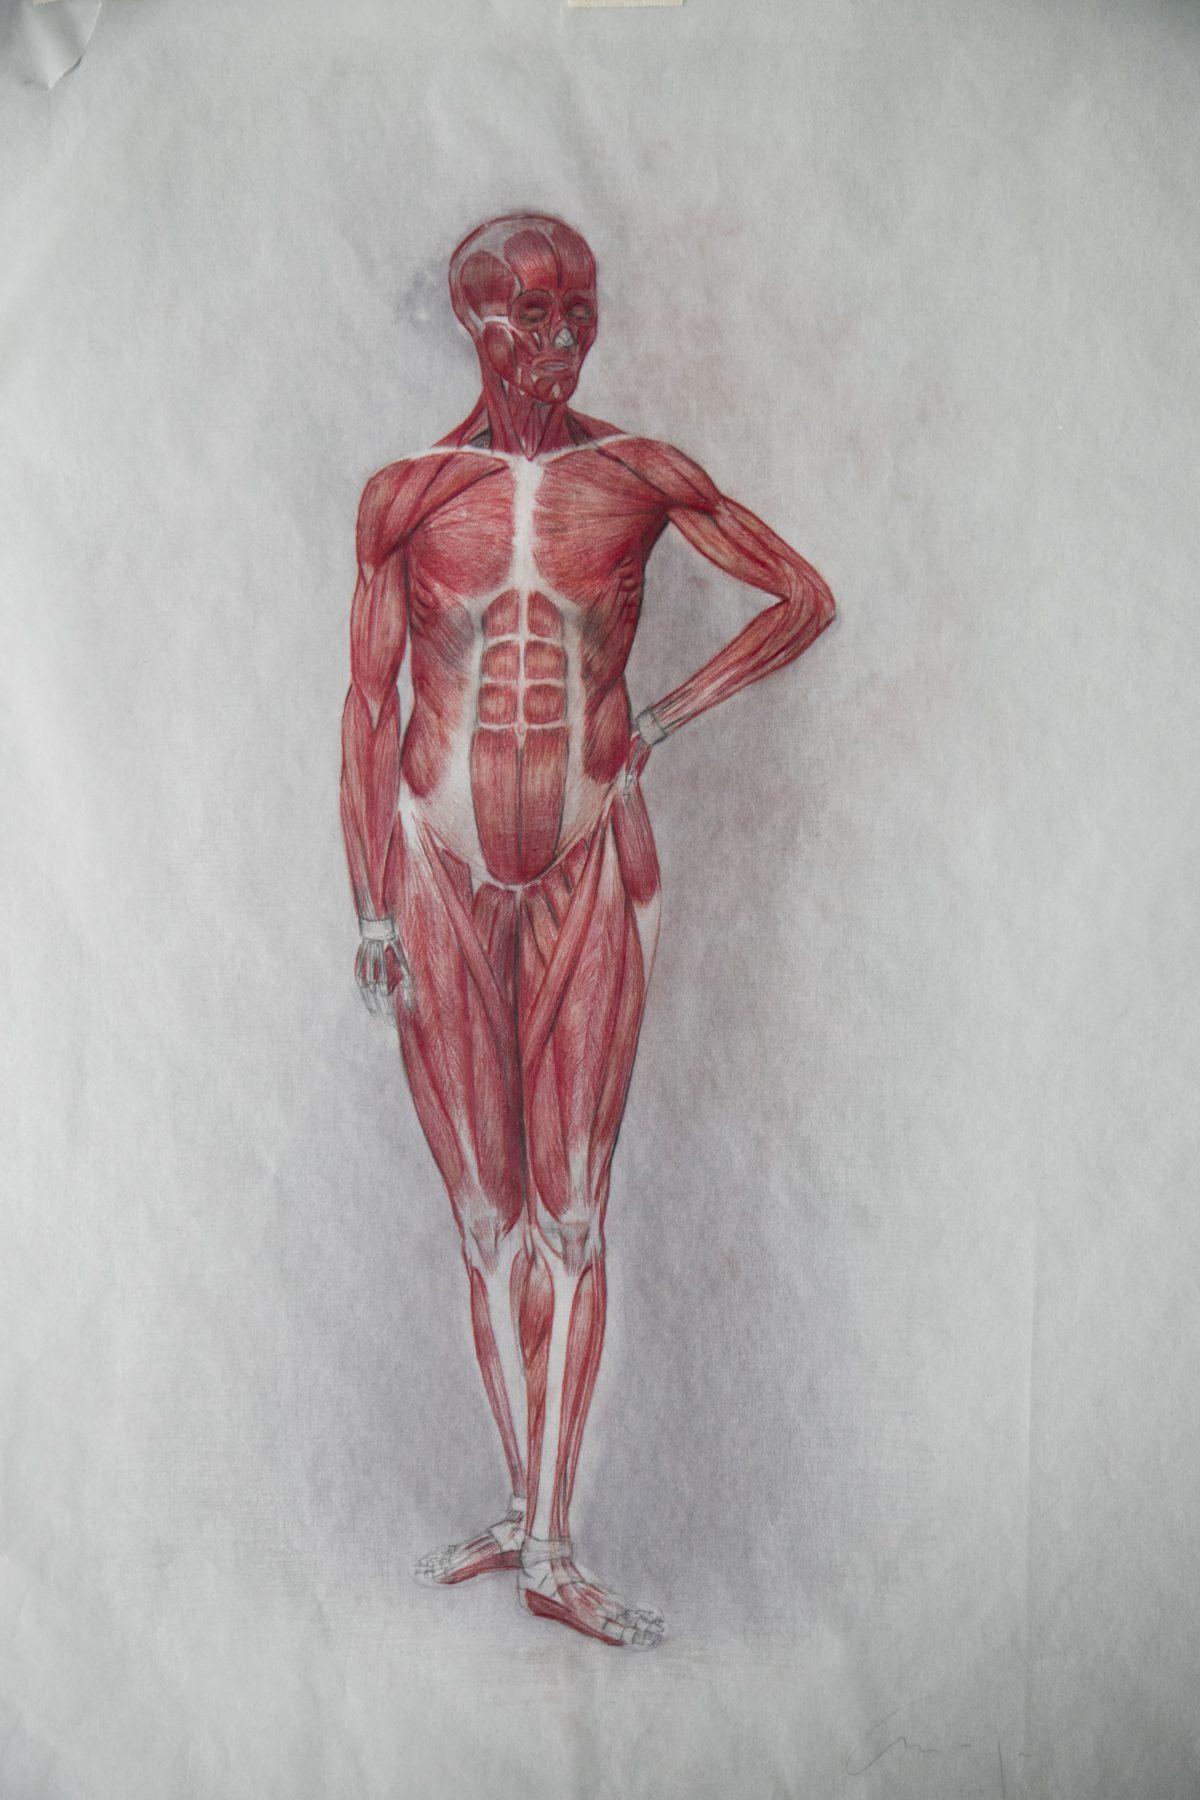 Anatomy musculature sketch by Amaya Gurpide. (Samira Bouaou/Epoch Times)